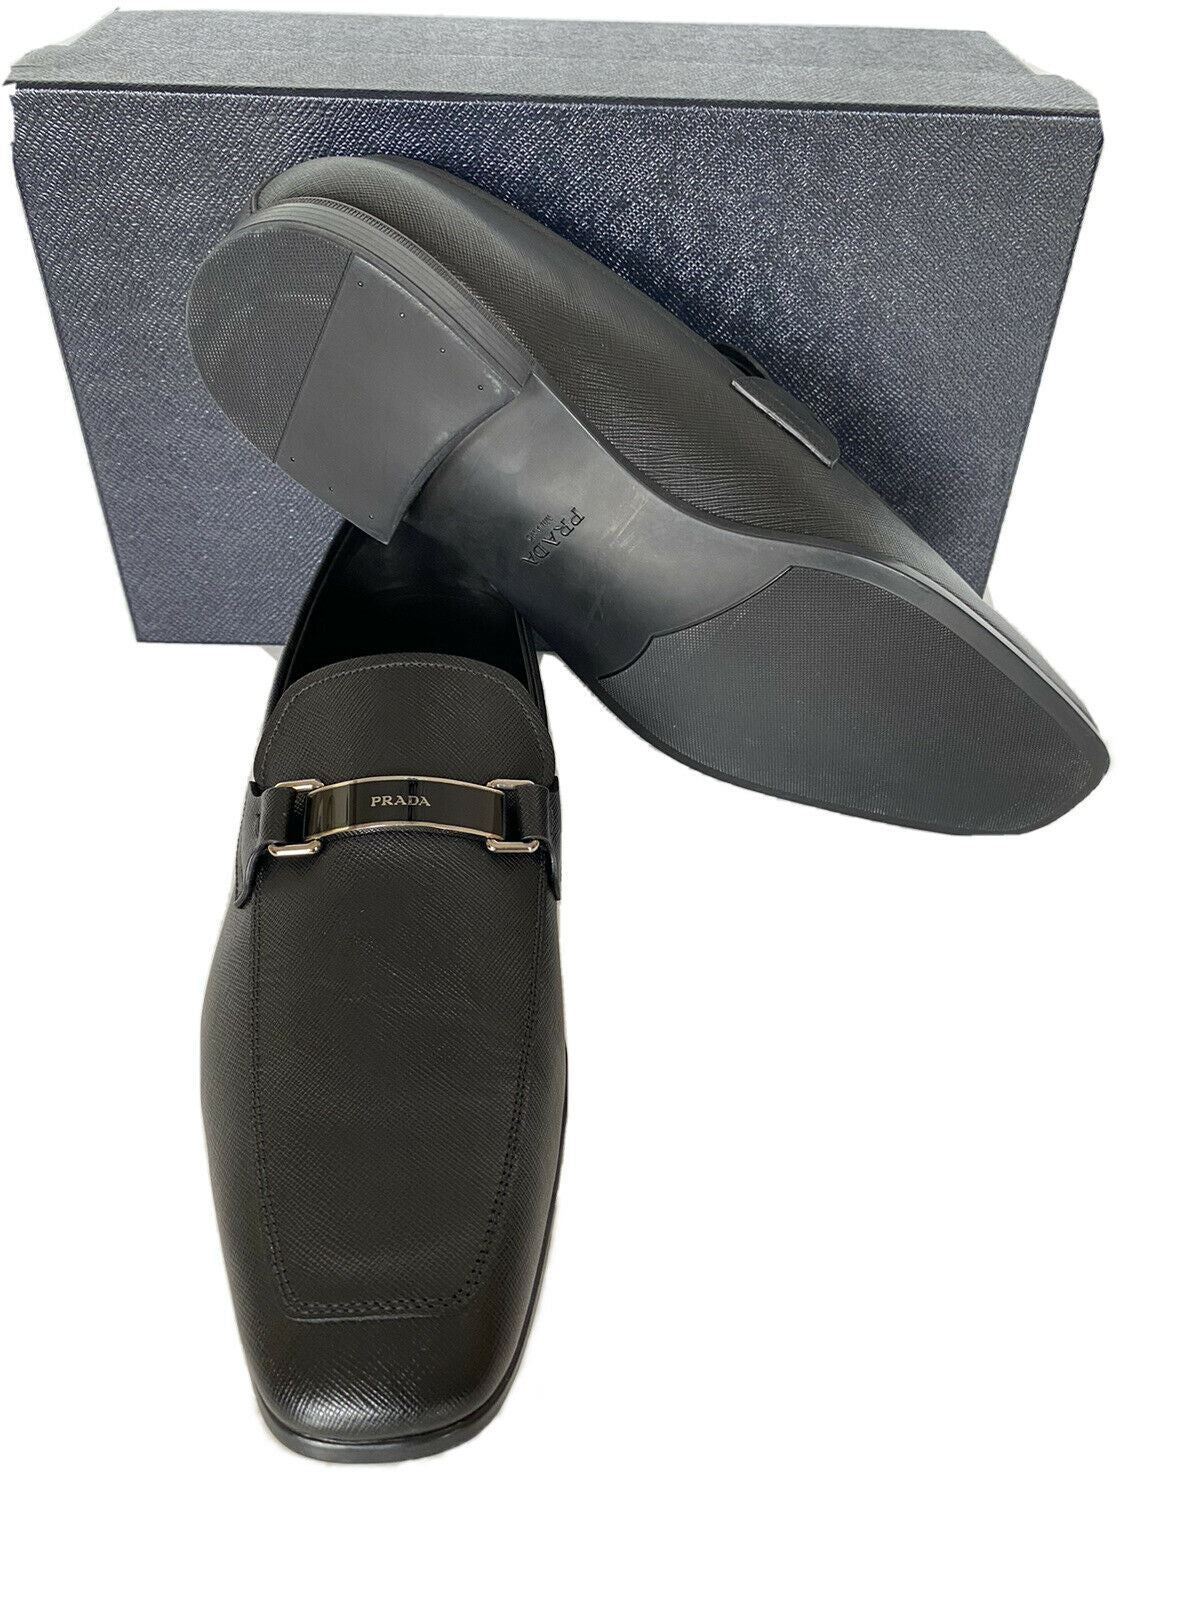 NIB PRADA Men's Black Leather Shoes 13 US (Prada 12) 2DC135 Italy